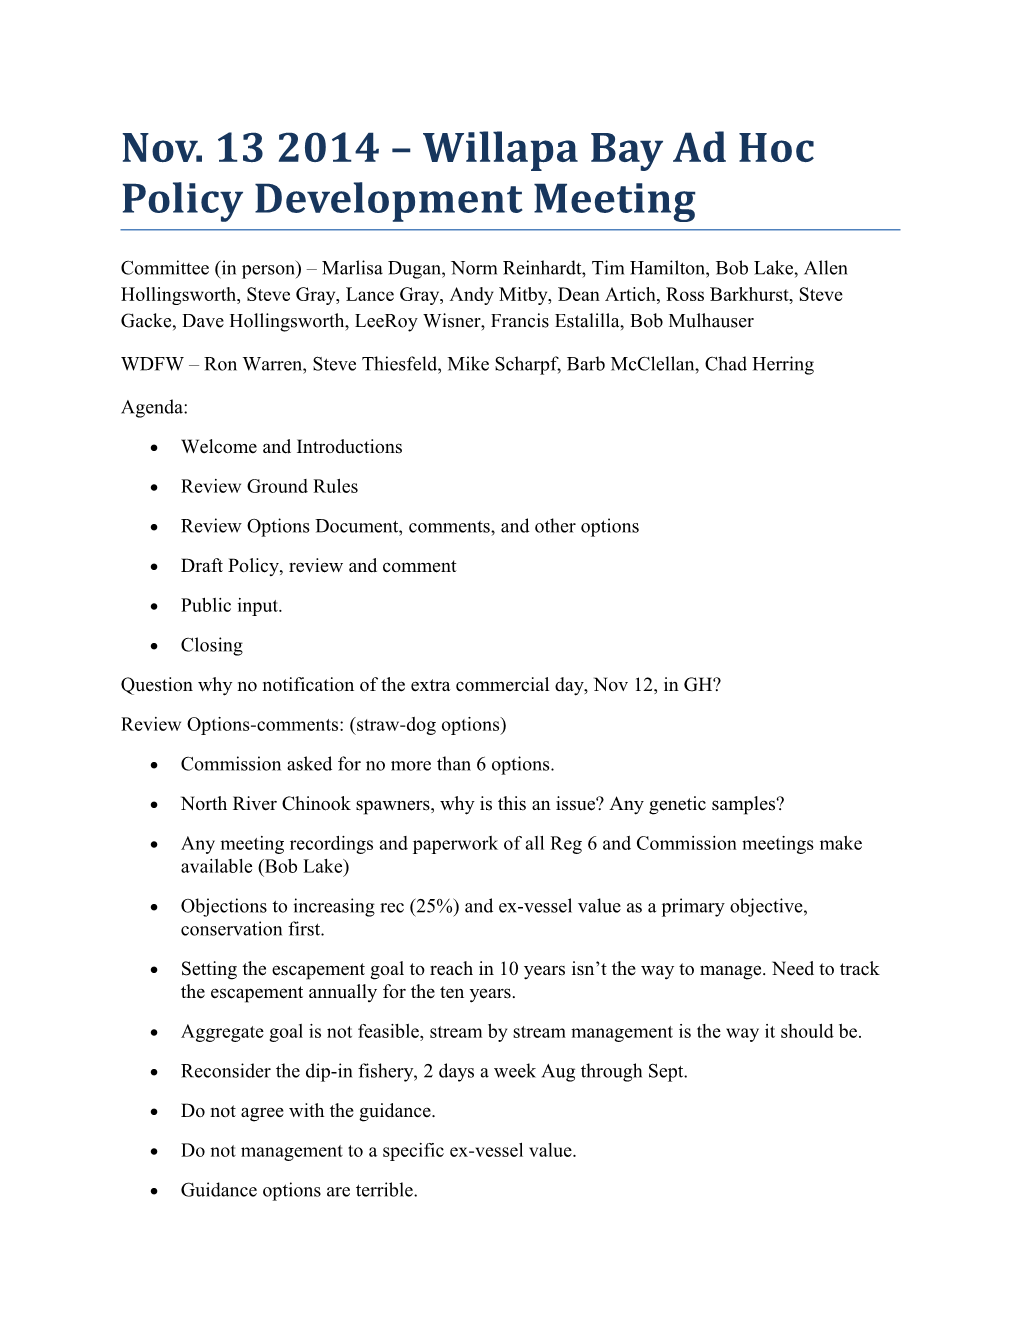 Nov. 13 2014 Willapa Bay Ad Hoc Policy Developmentmeeting